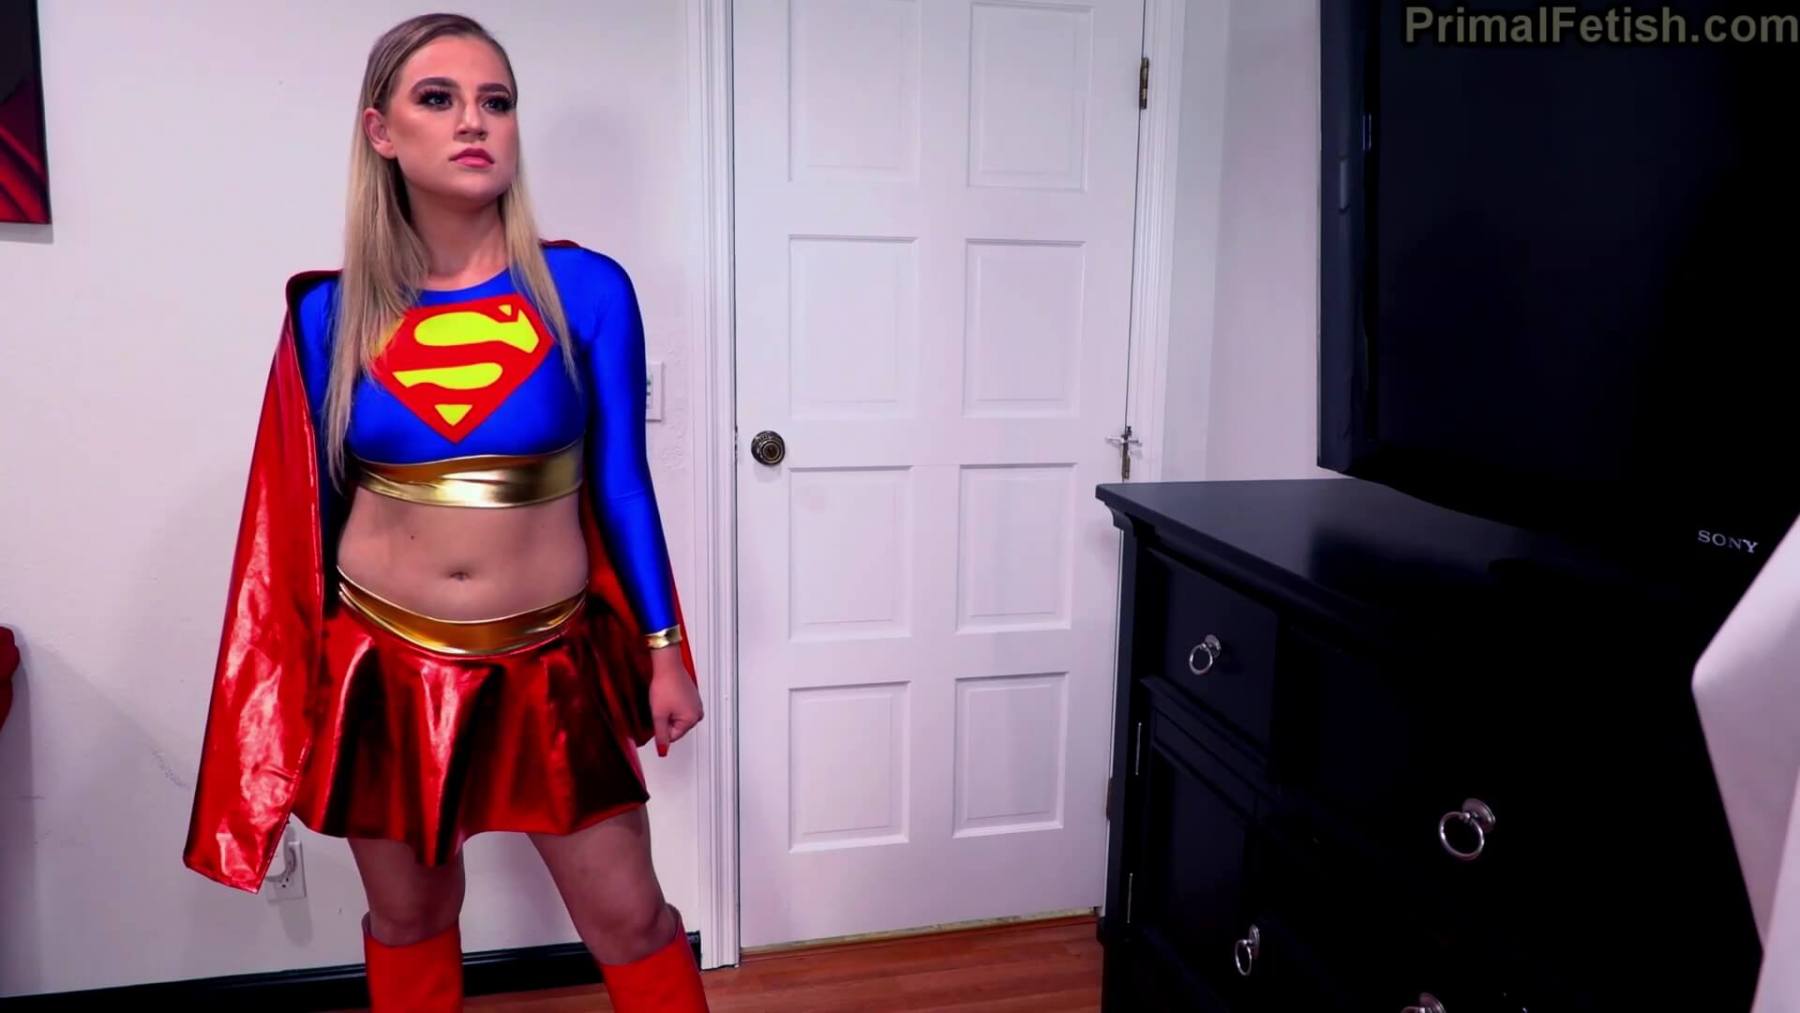 Time supergirl first teenage exposure kryptonite pink superheroine to List of